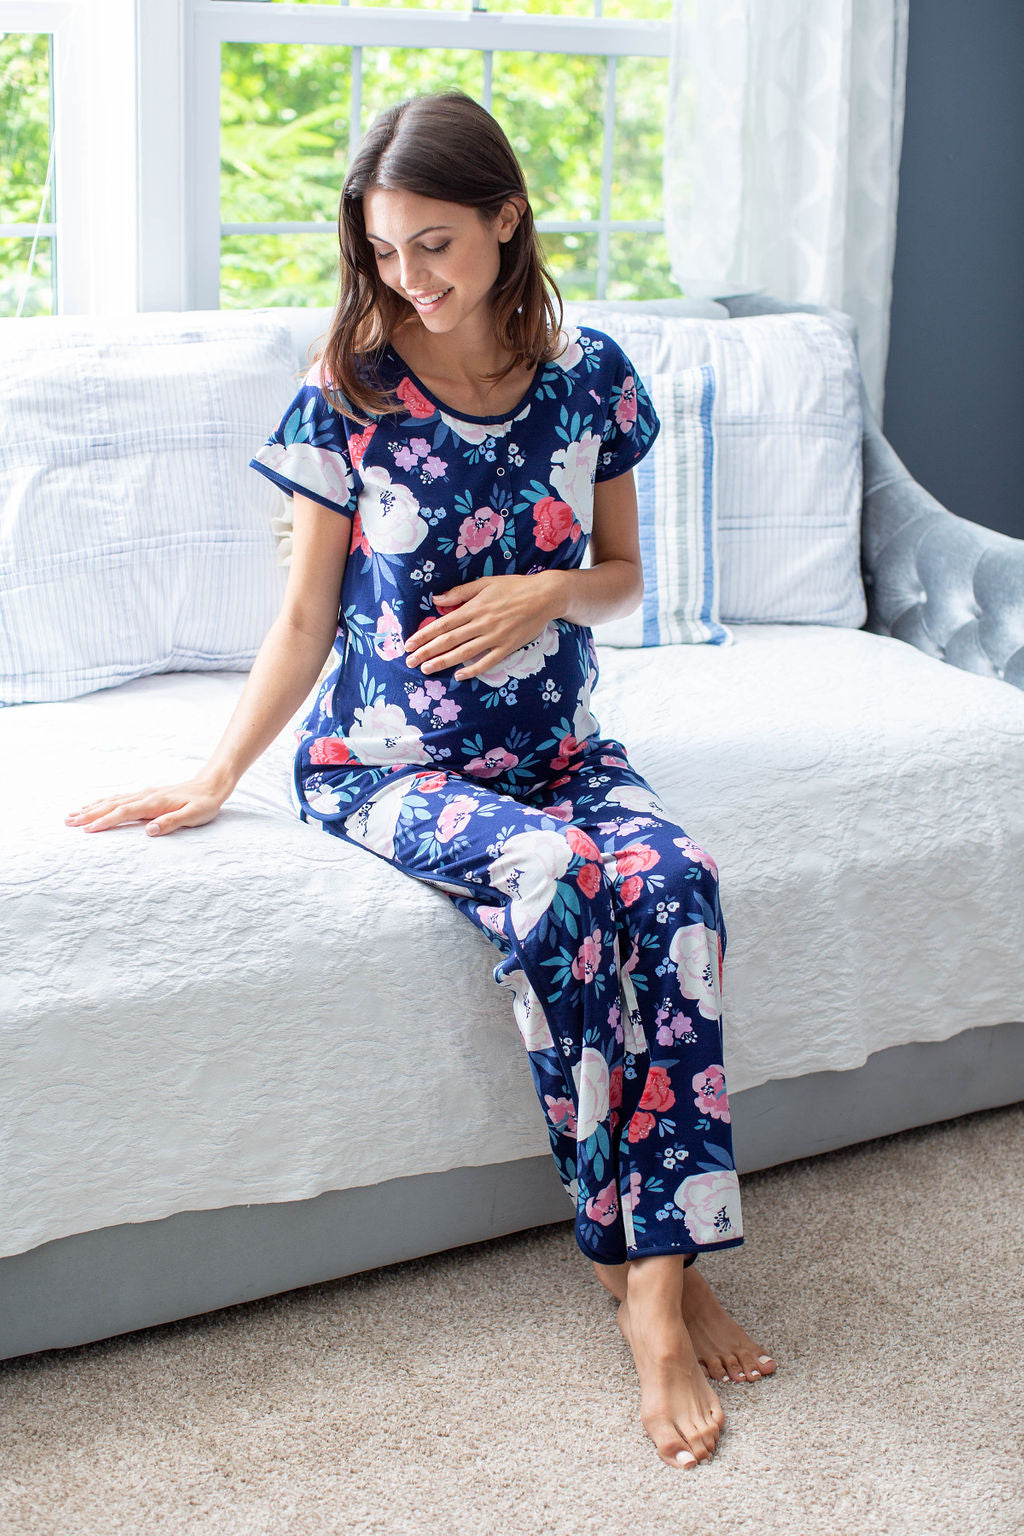 Shop Comfy and Stylish Maternity & Breastfeeding Pyjamas